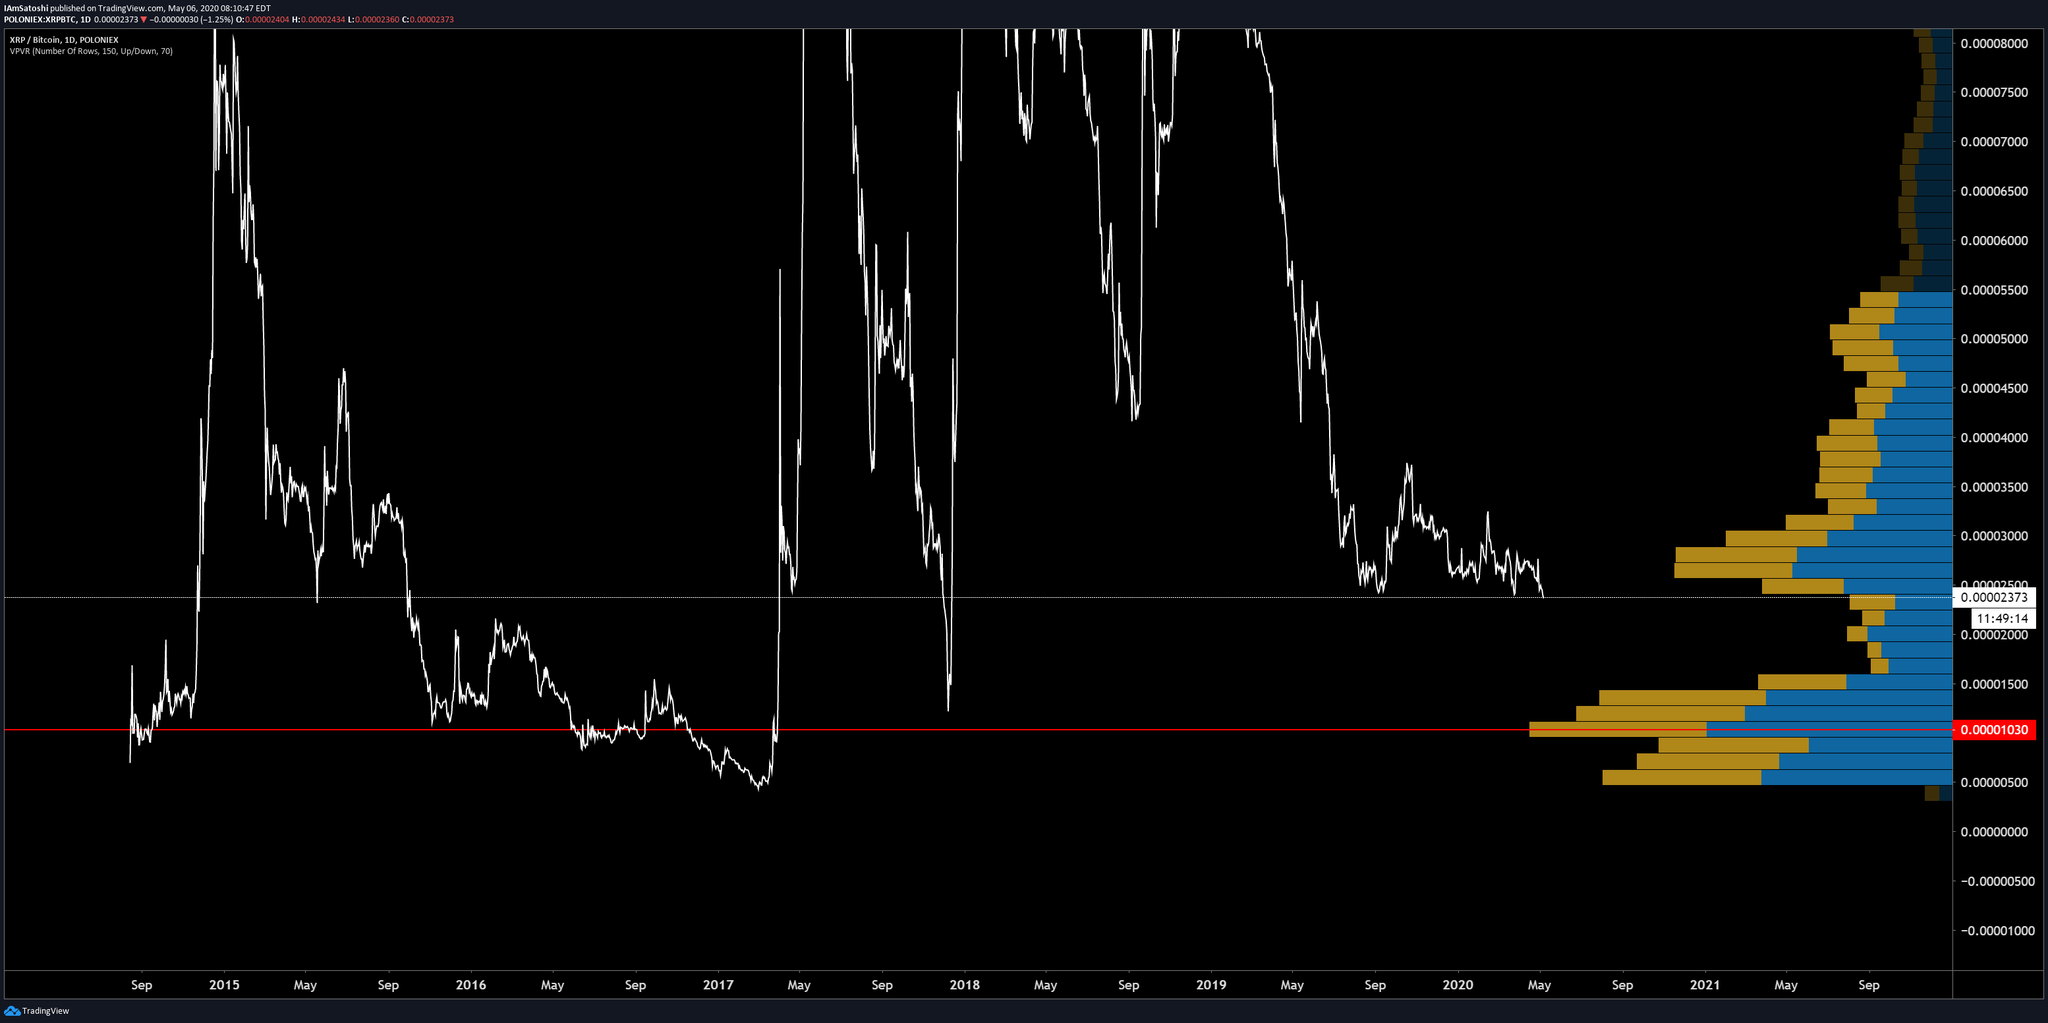 XRP/BTC chart bearish